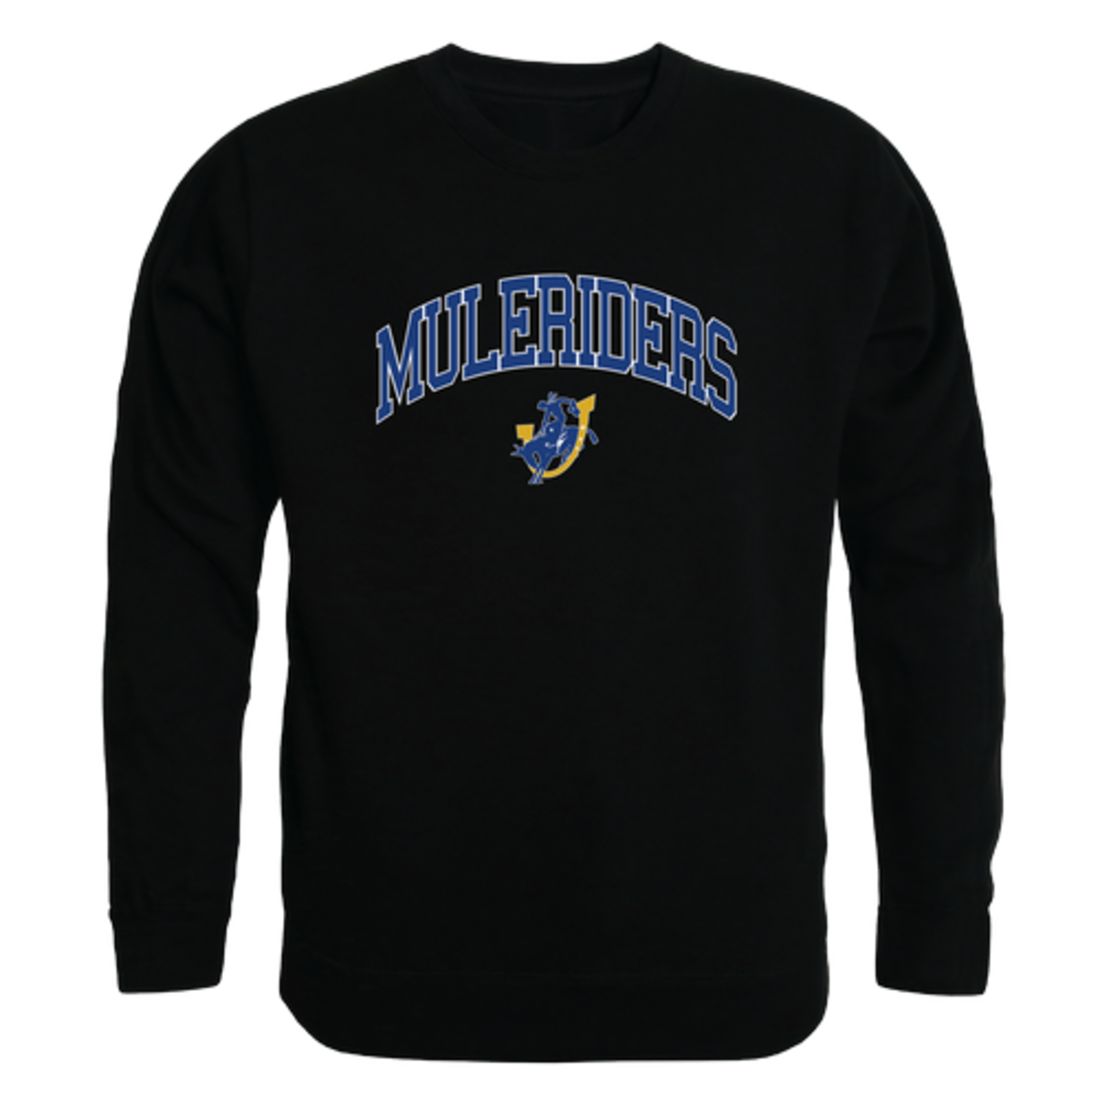 Southern-Arkansas-University-Muleriders-Campus-Fleece-Crewneck-Pullover-Sweatshirt